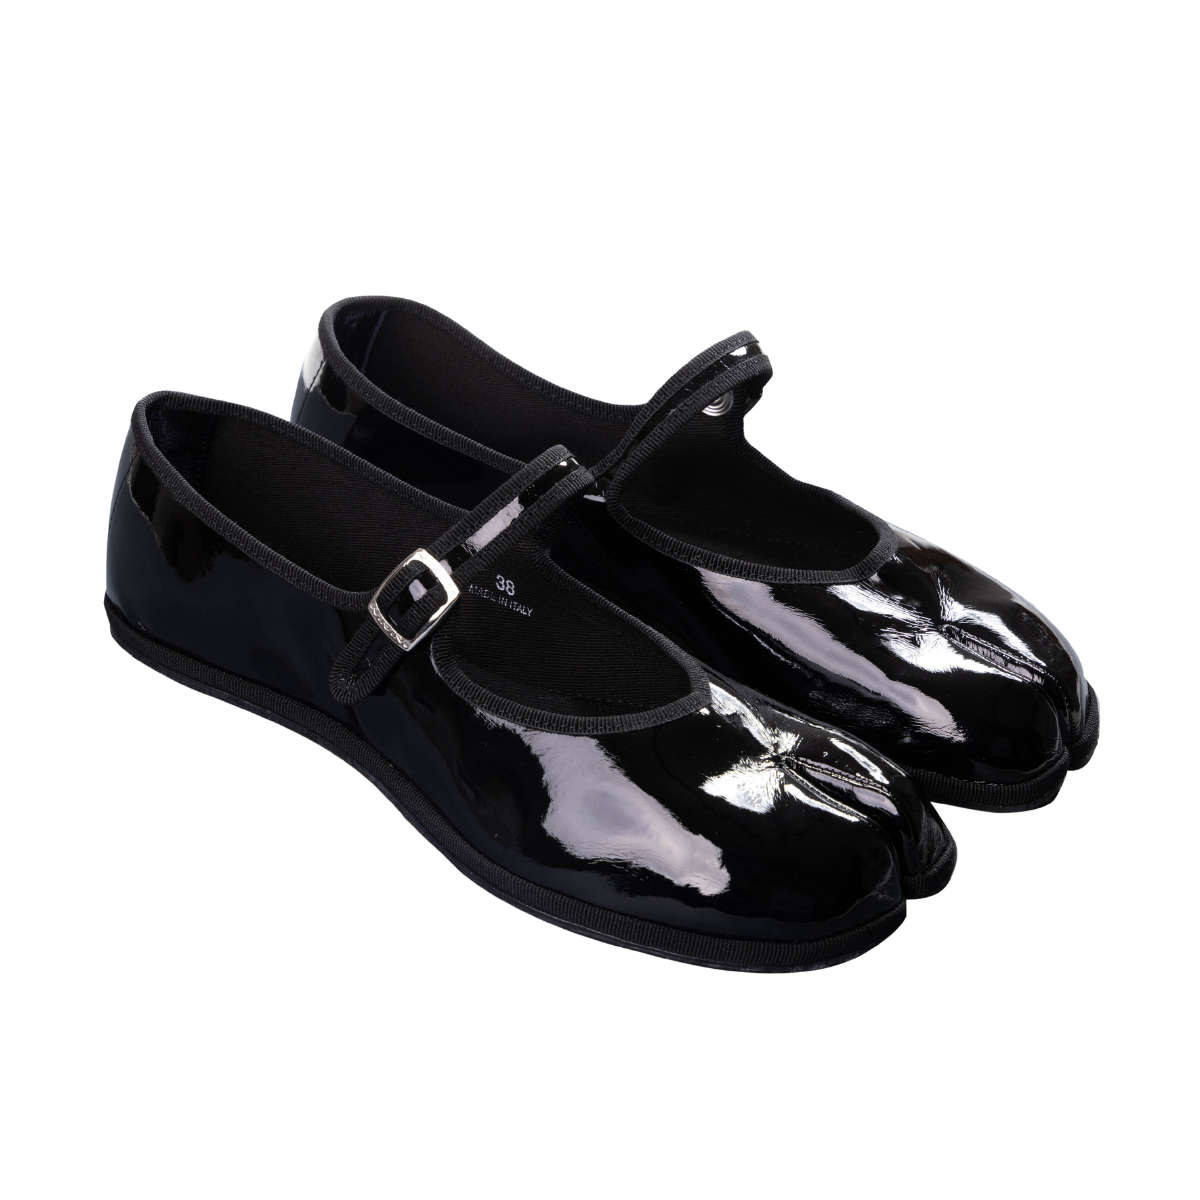 drogheria Crivellini | mary jane shoes for women - Tabi MJ Patent